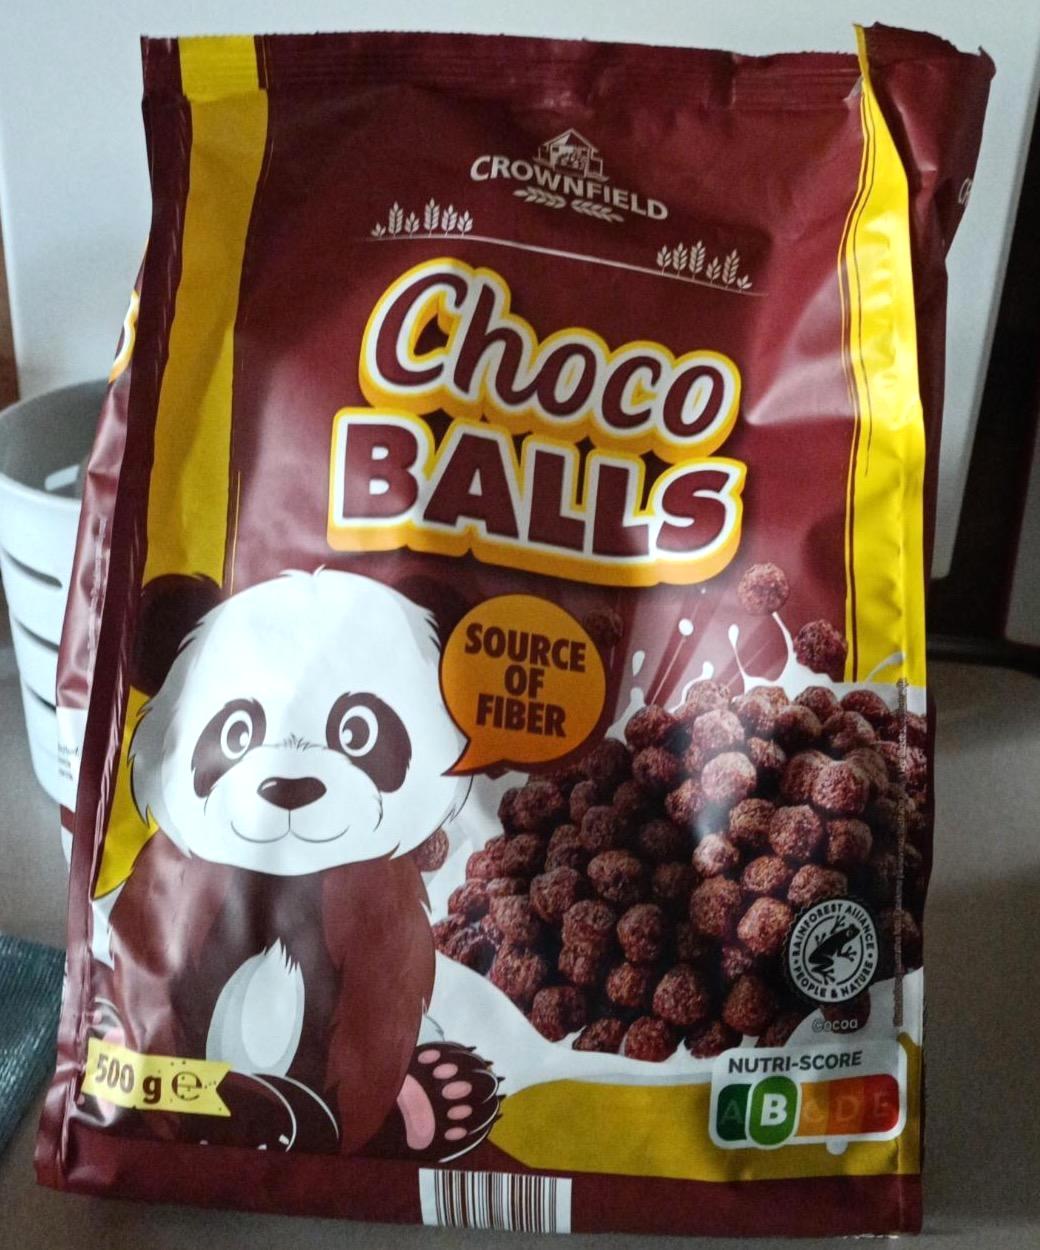 Képek - Choco balls Crownfield